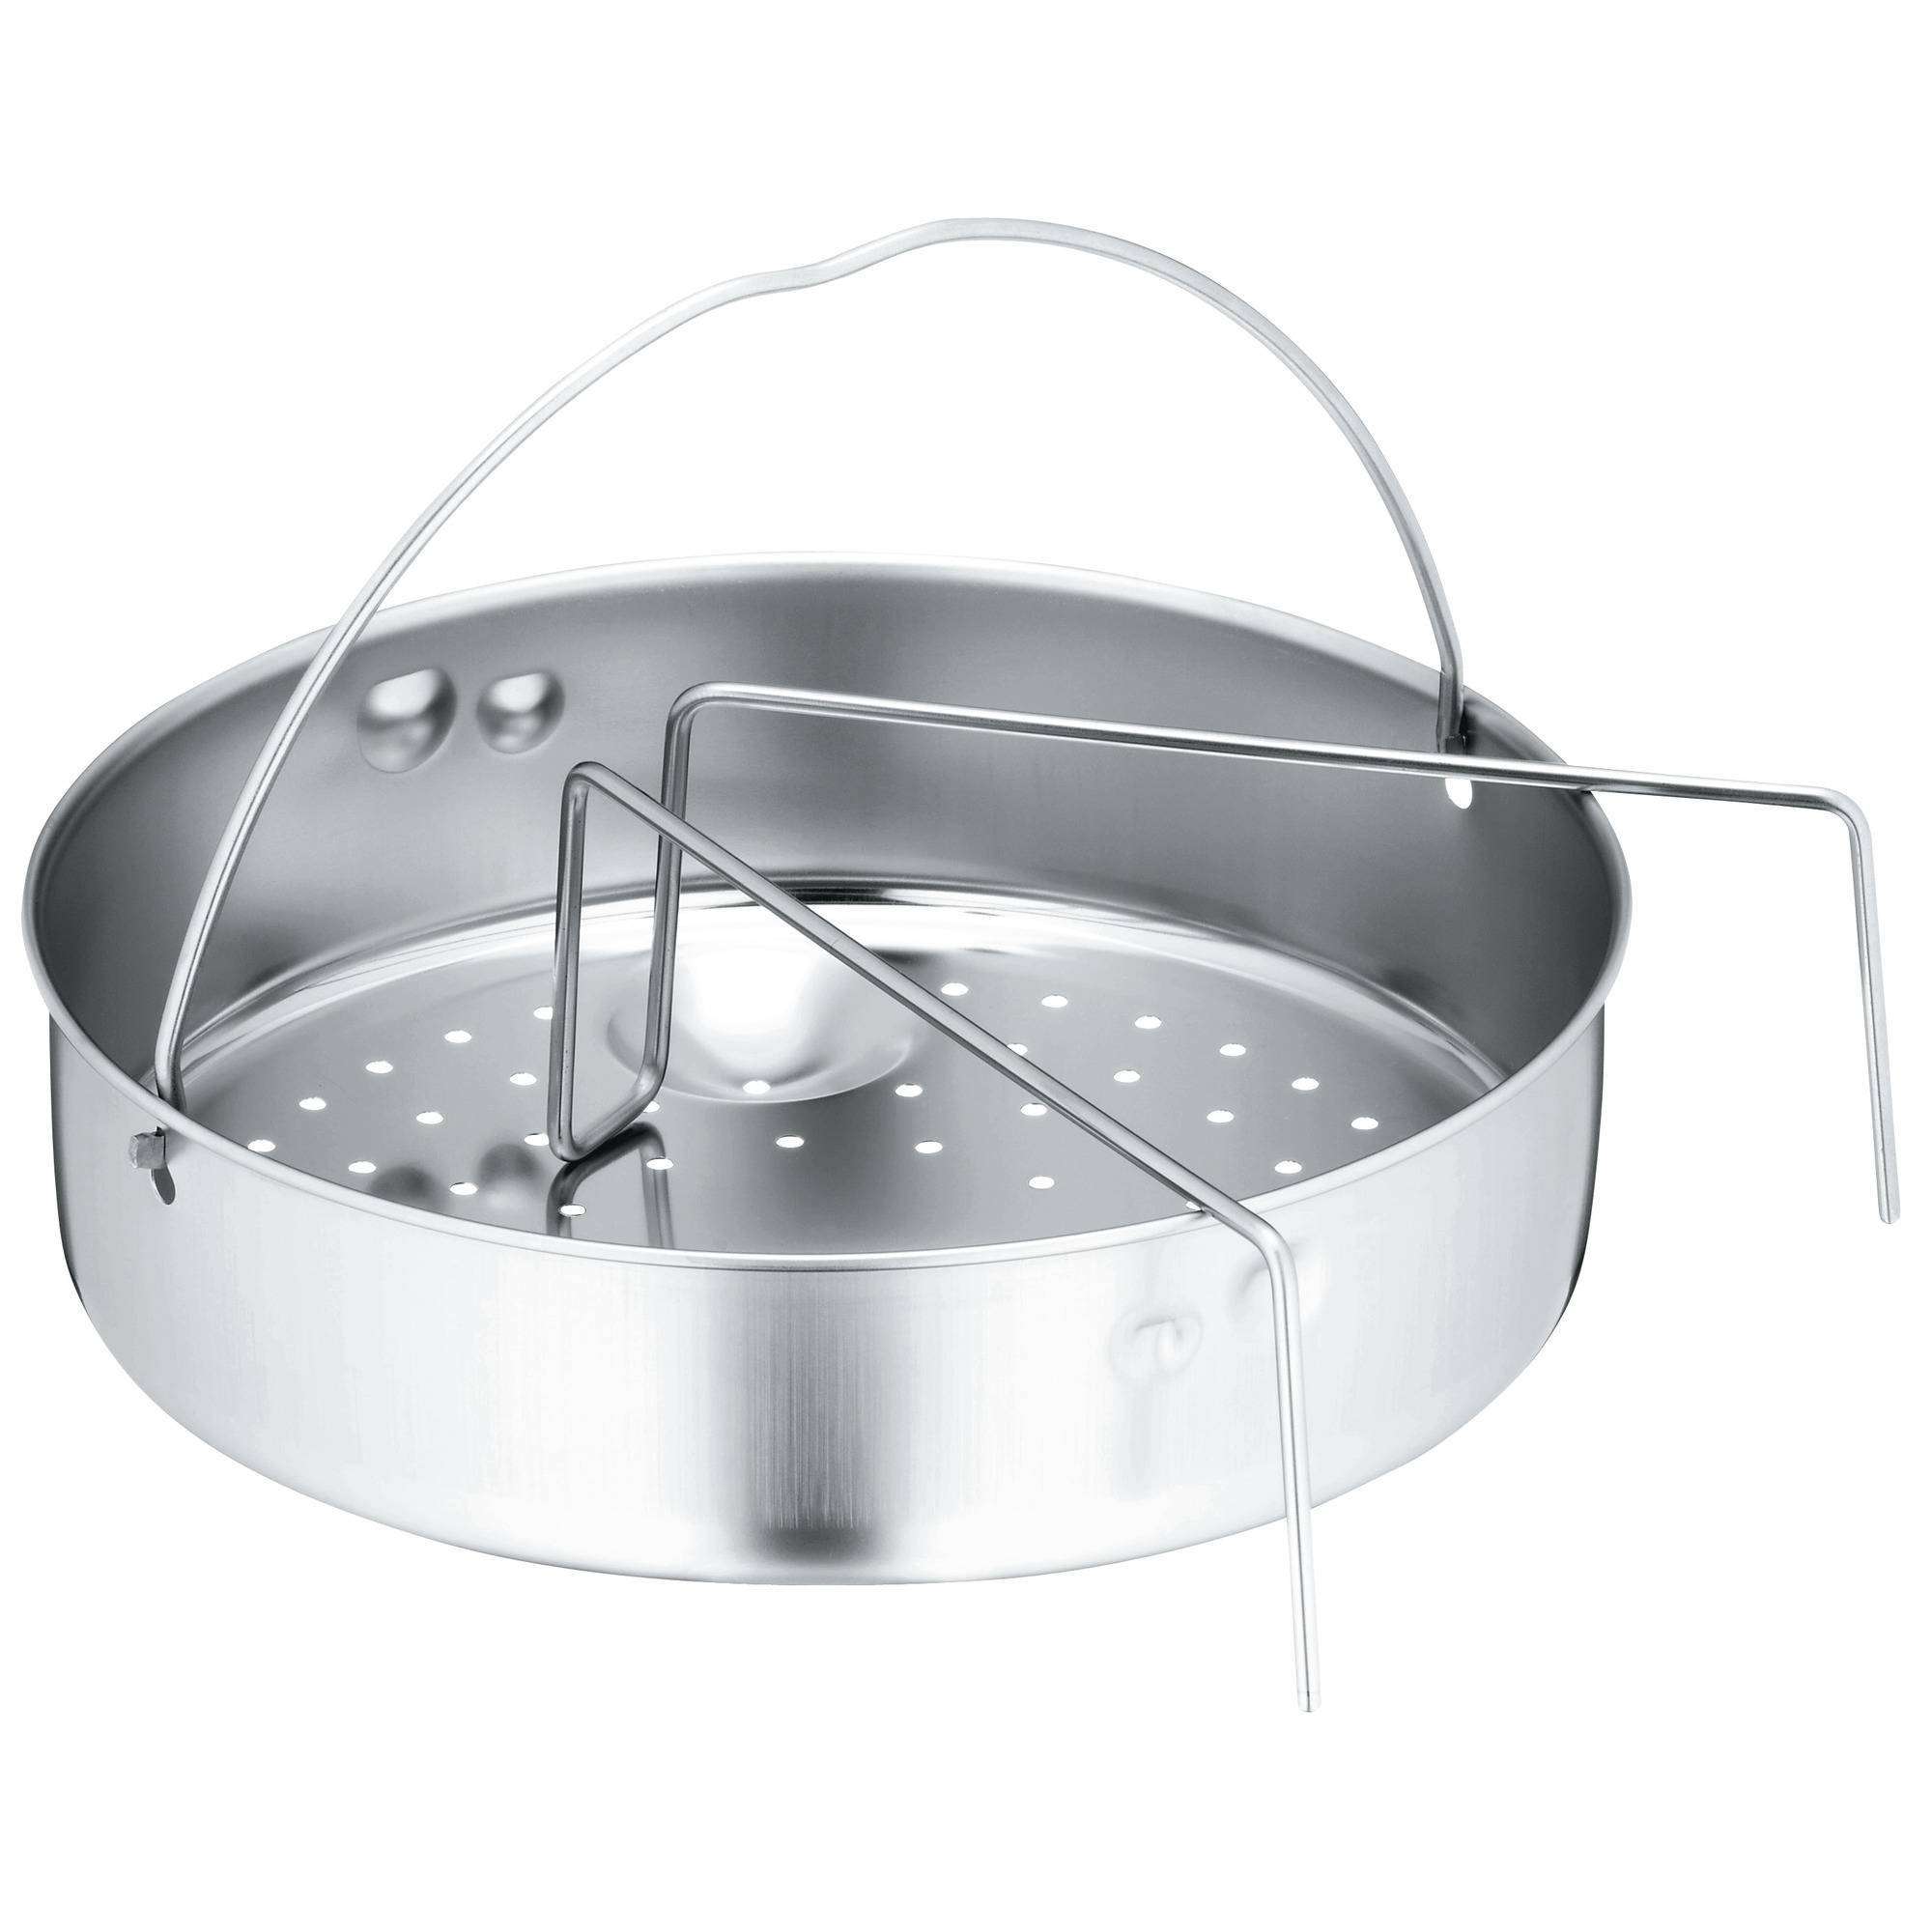 https://www.repuestodomestic.com/26259/cestillo-perforado-para-cocinar-al-vapor-con-olla-a-presion-wmf-perfect-22-cm-diametro.jpg